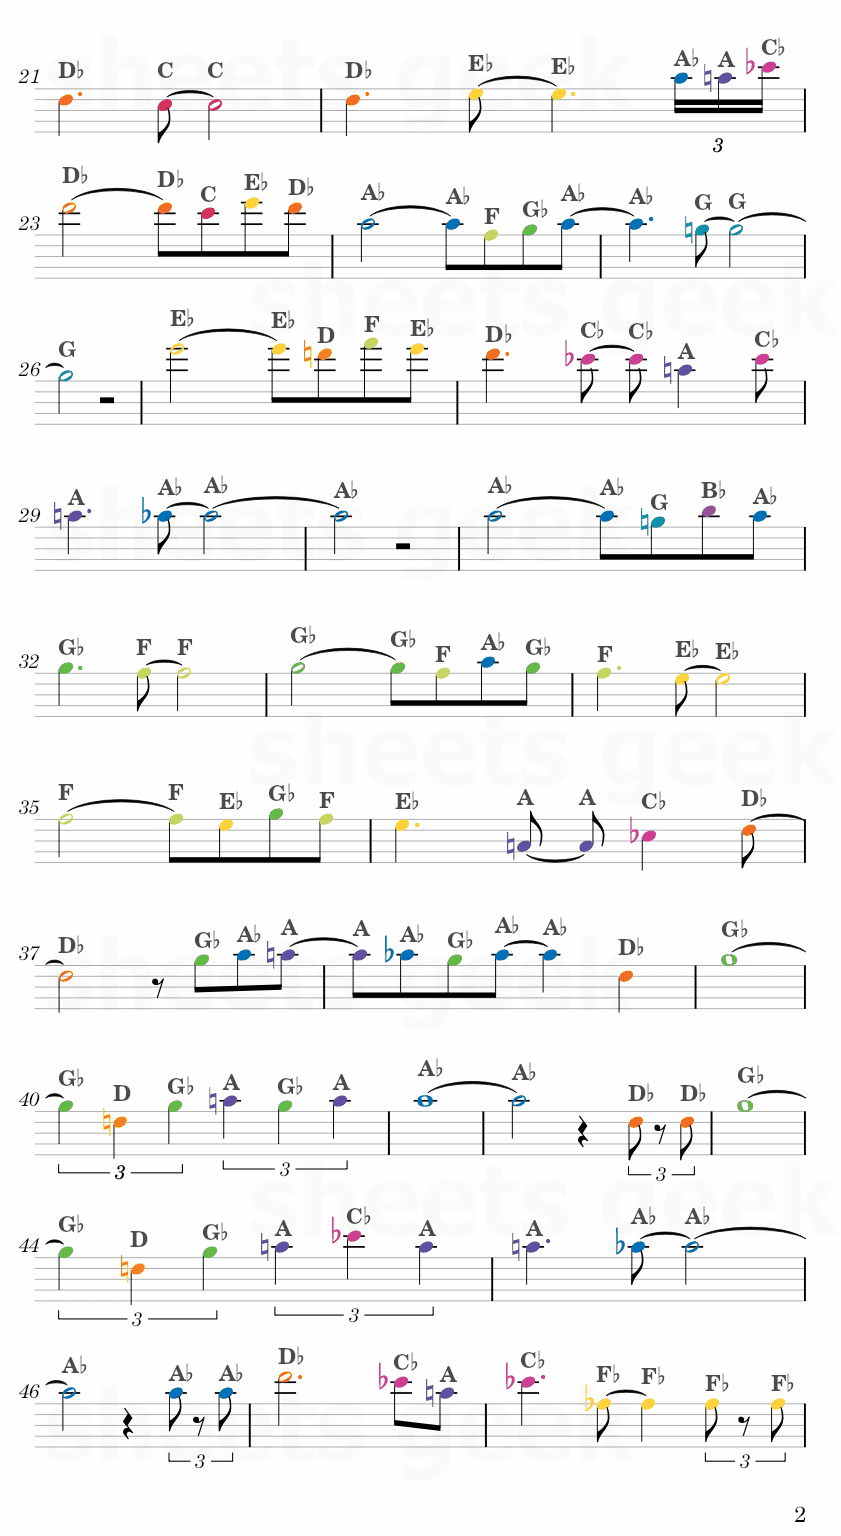 Gusty Garden Galaxy - Super Mario Galaxy Easy Sheet Music Free for piano, keyboard, flute, violin, sax, cello page 2